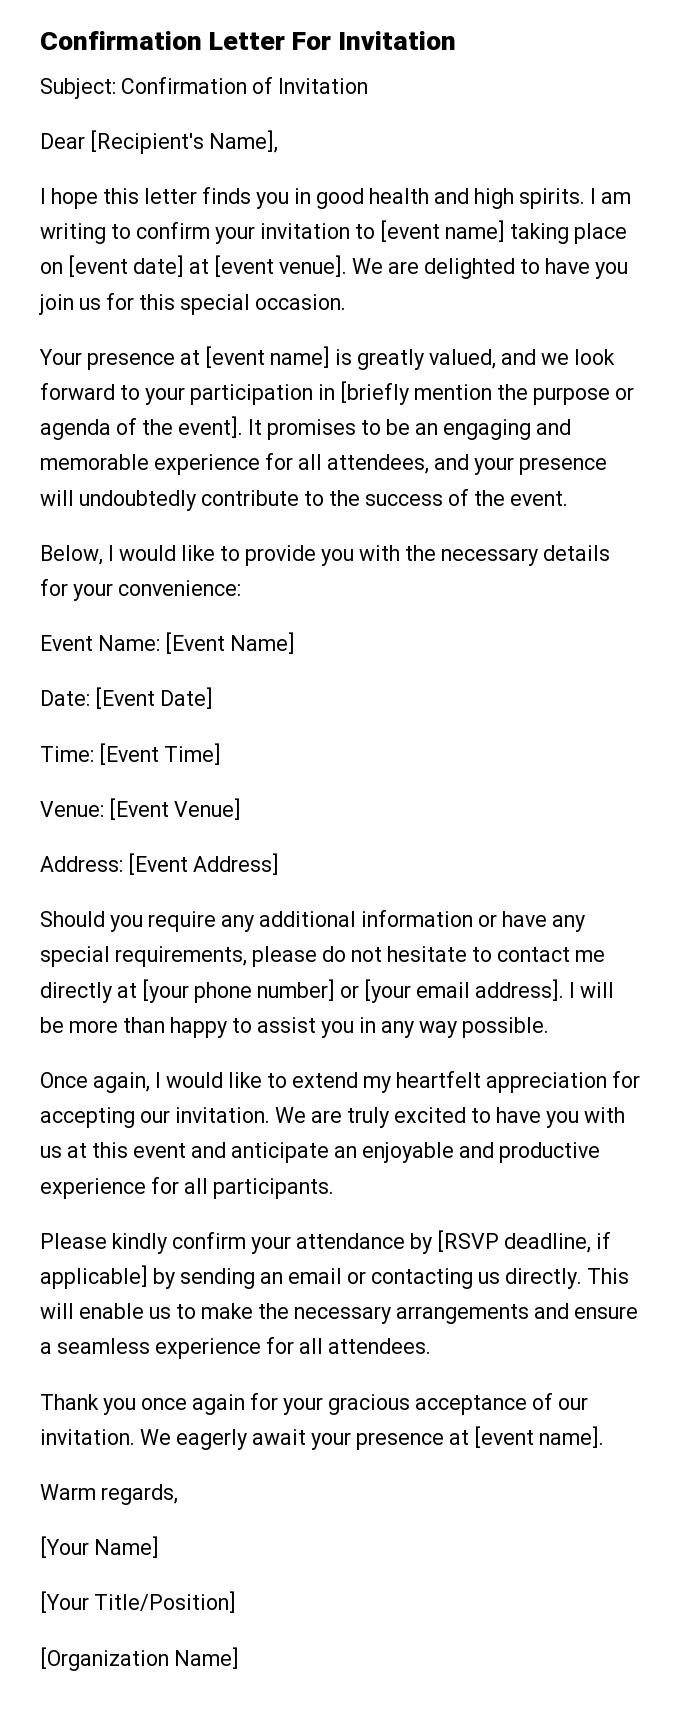 Confirmation Letter For Invitation